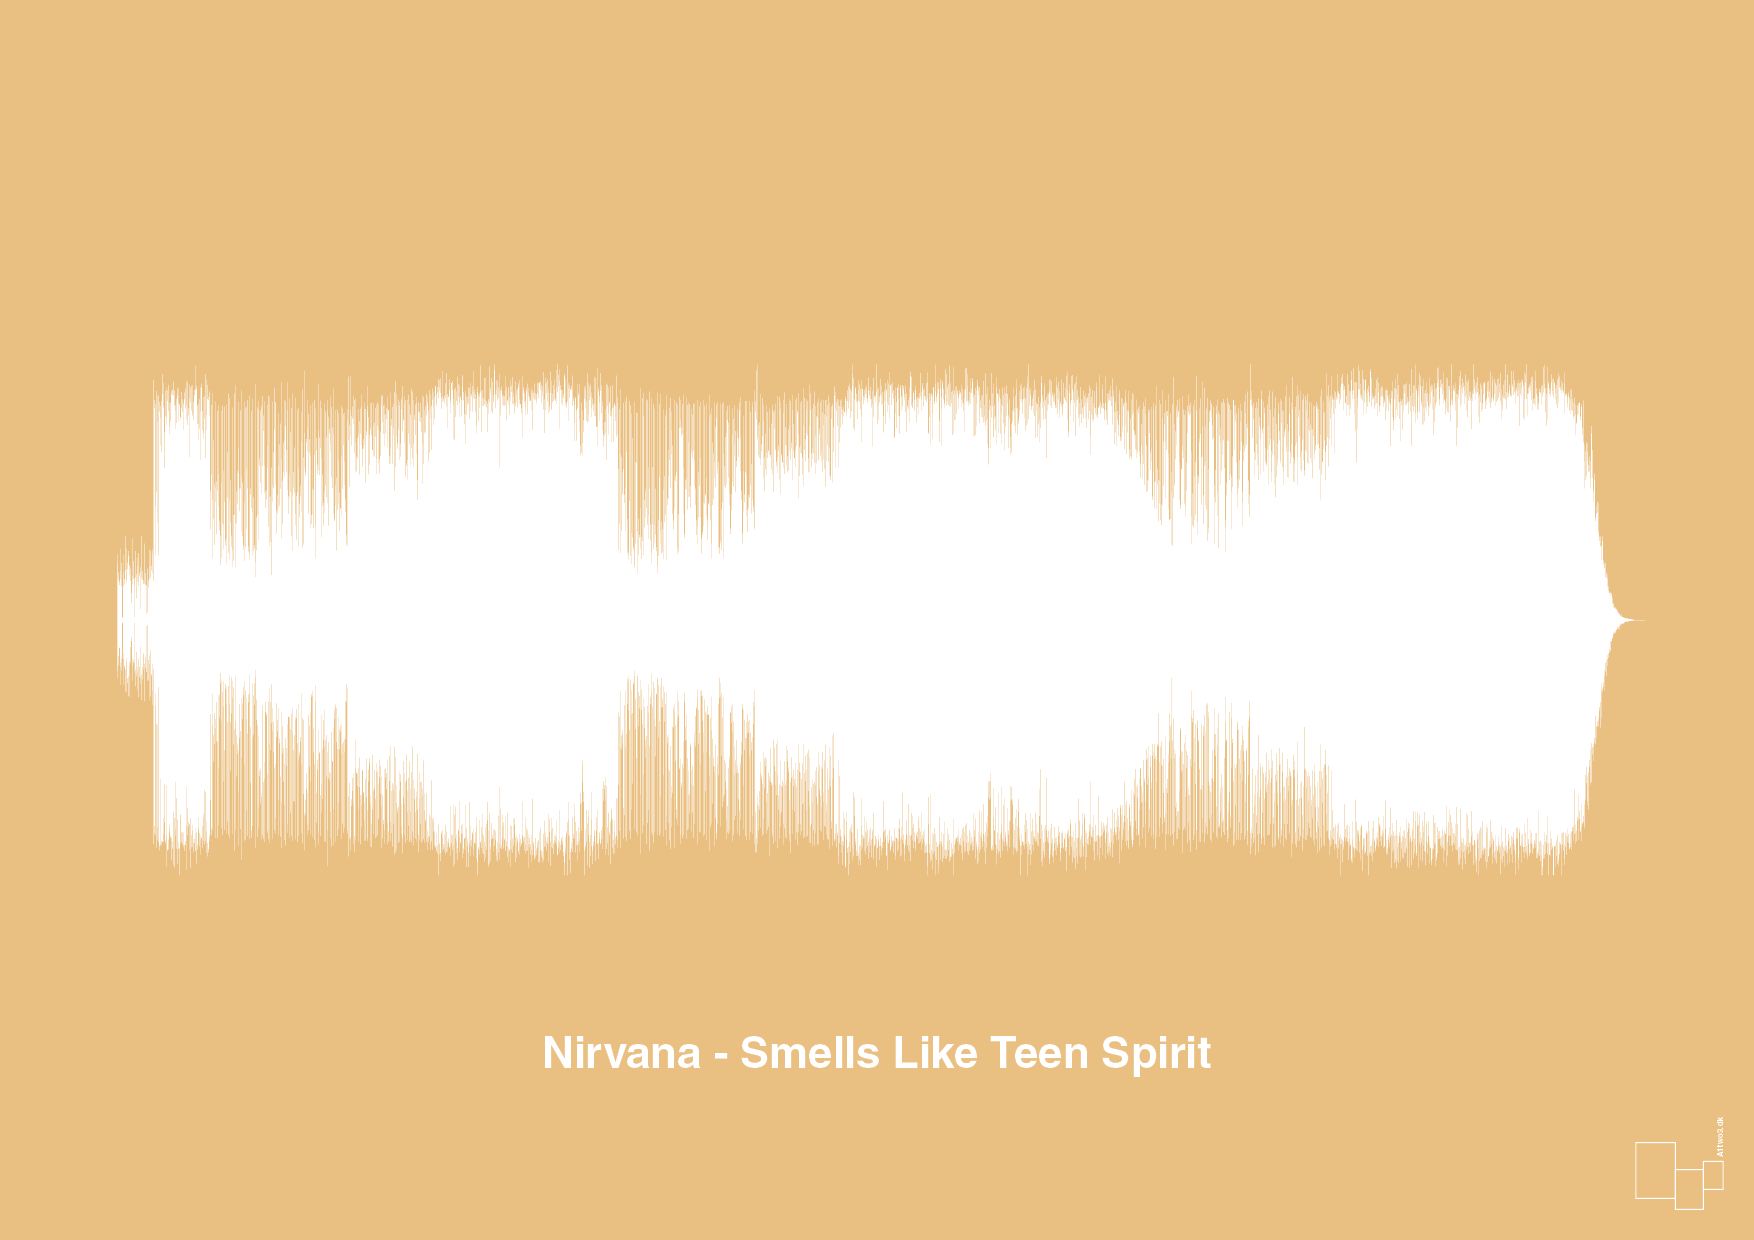 nirvana - smells like teen spirit - Plakat med Musik i Charismatic